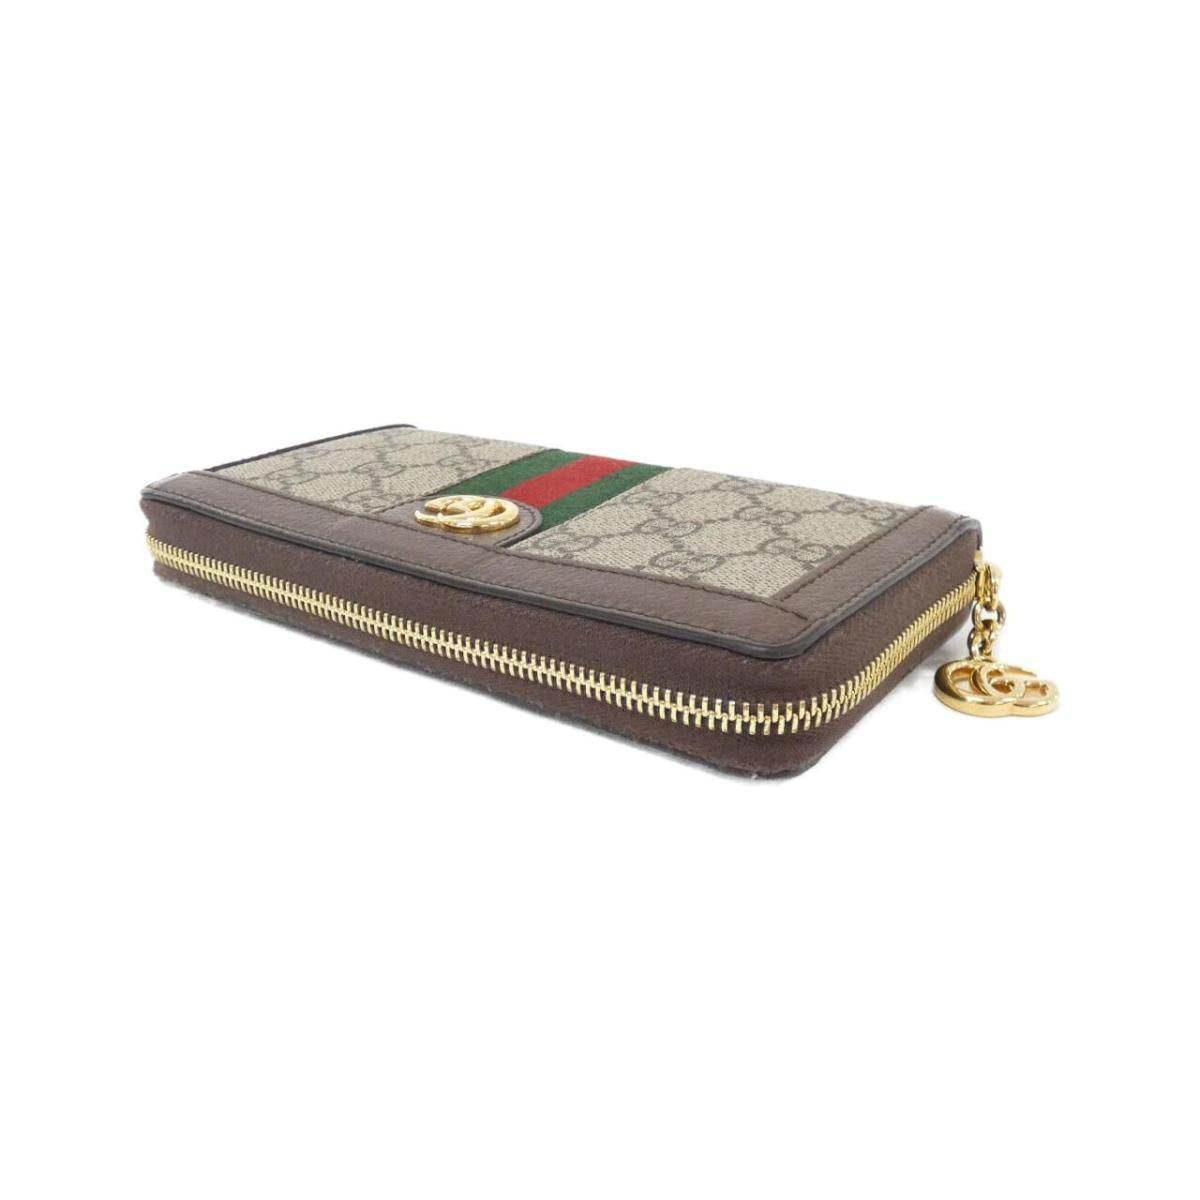 Gucci OPHIDIA 523154 96IWG Wallet